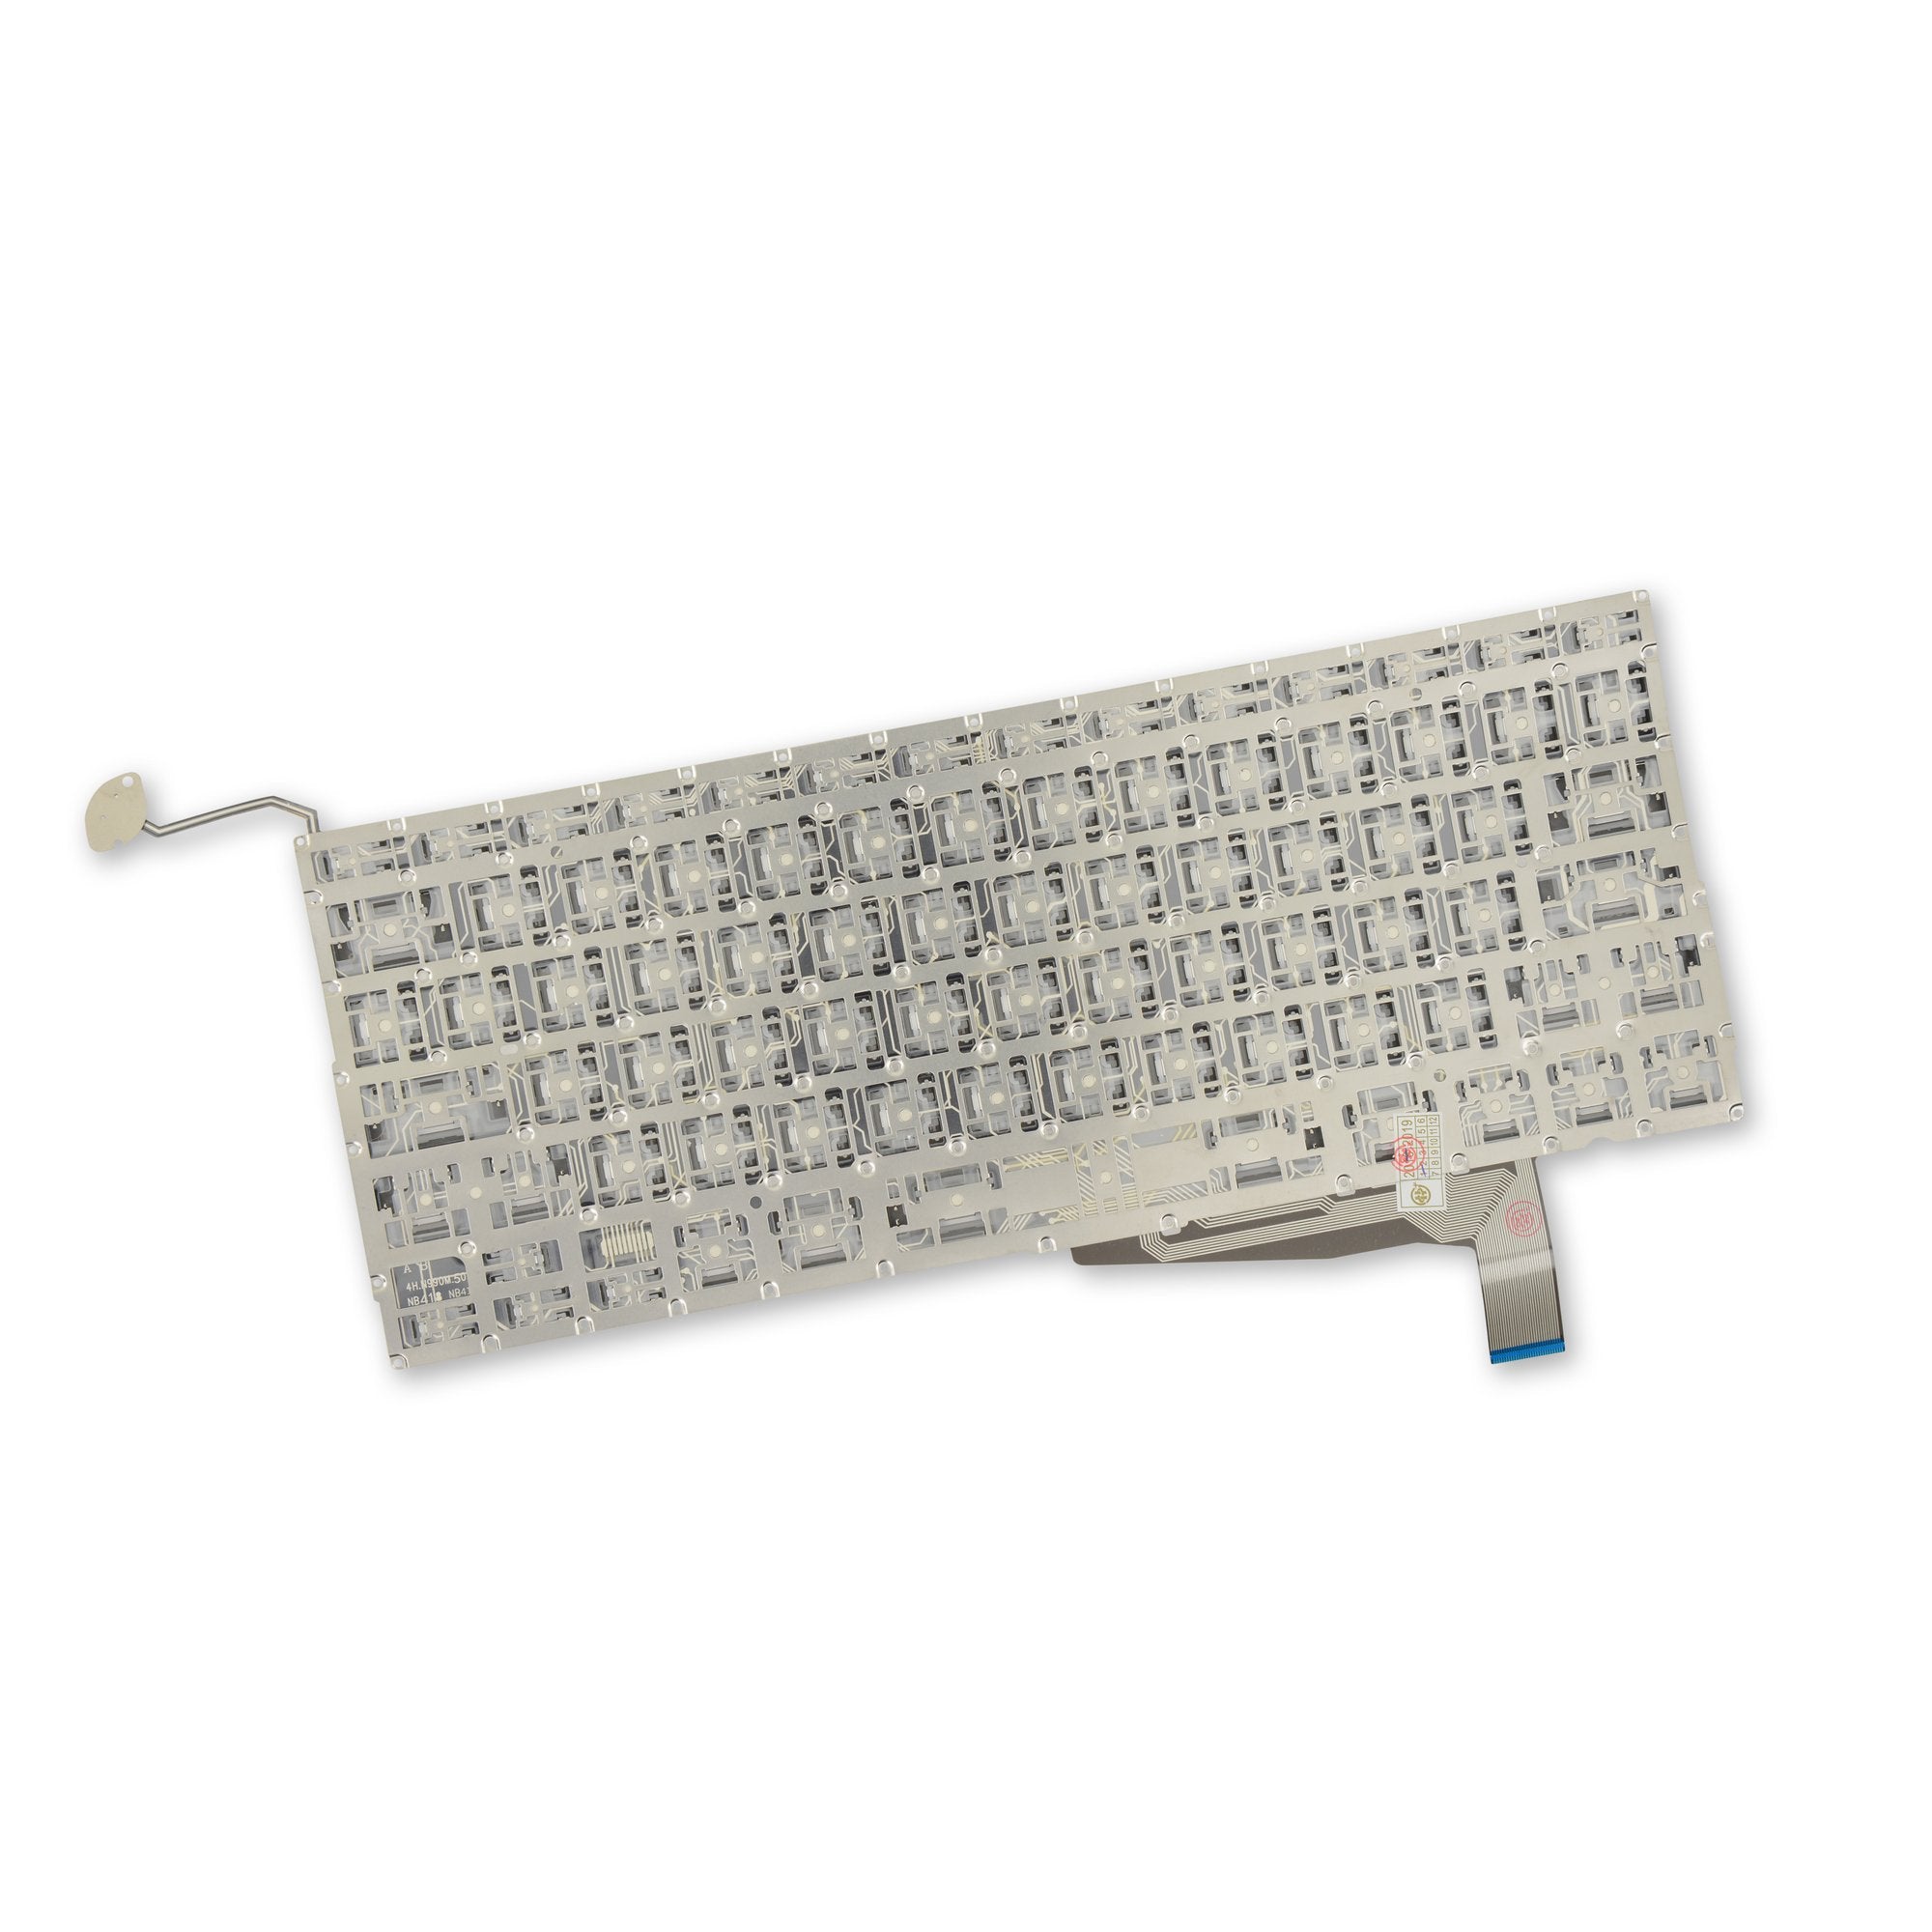 MacBook Pro 15" Unibody (Late 2008-Early 2009) Keyboard